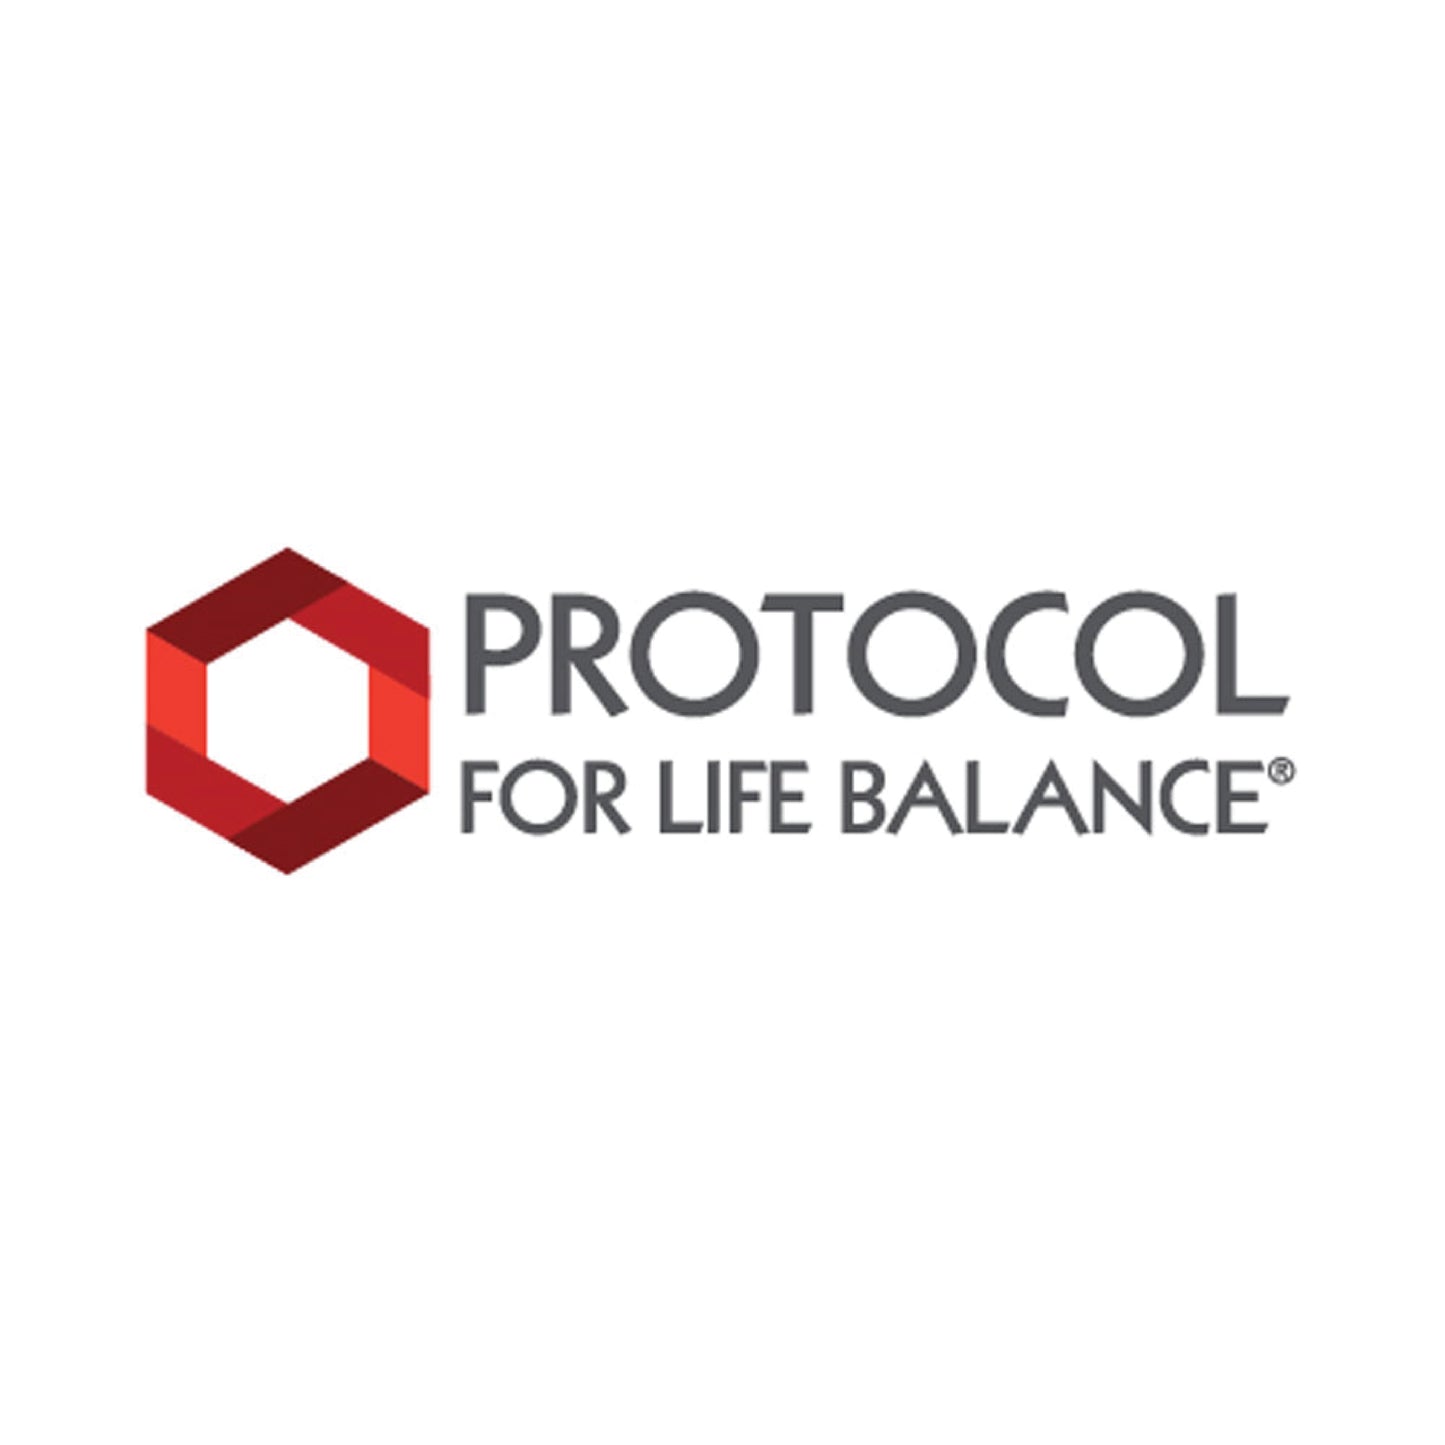 Protocol for Life Balance, Ubiquinol, 100 mg, 60 Softgels - Bloom Concept